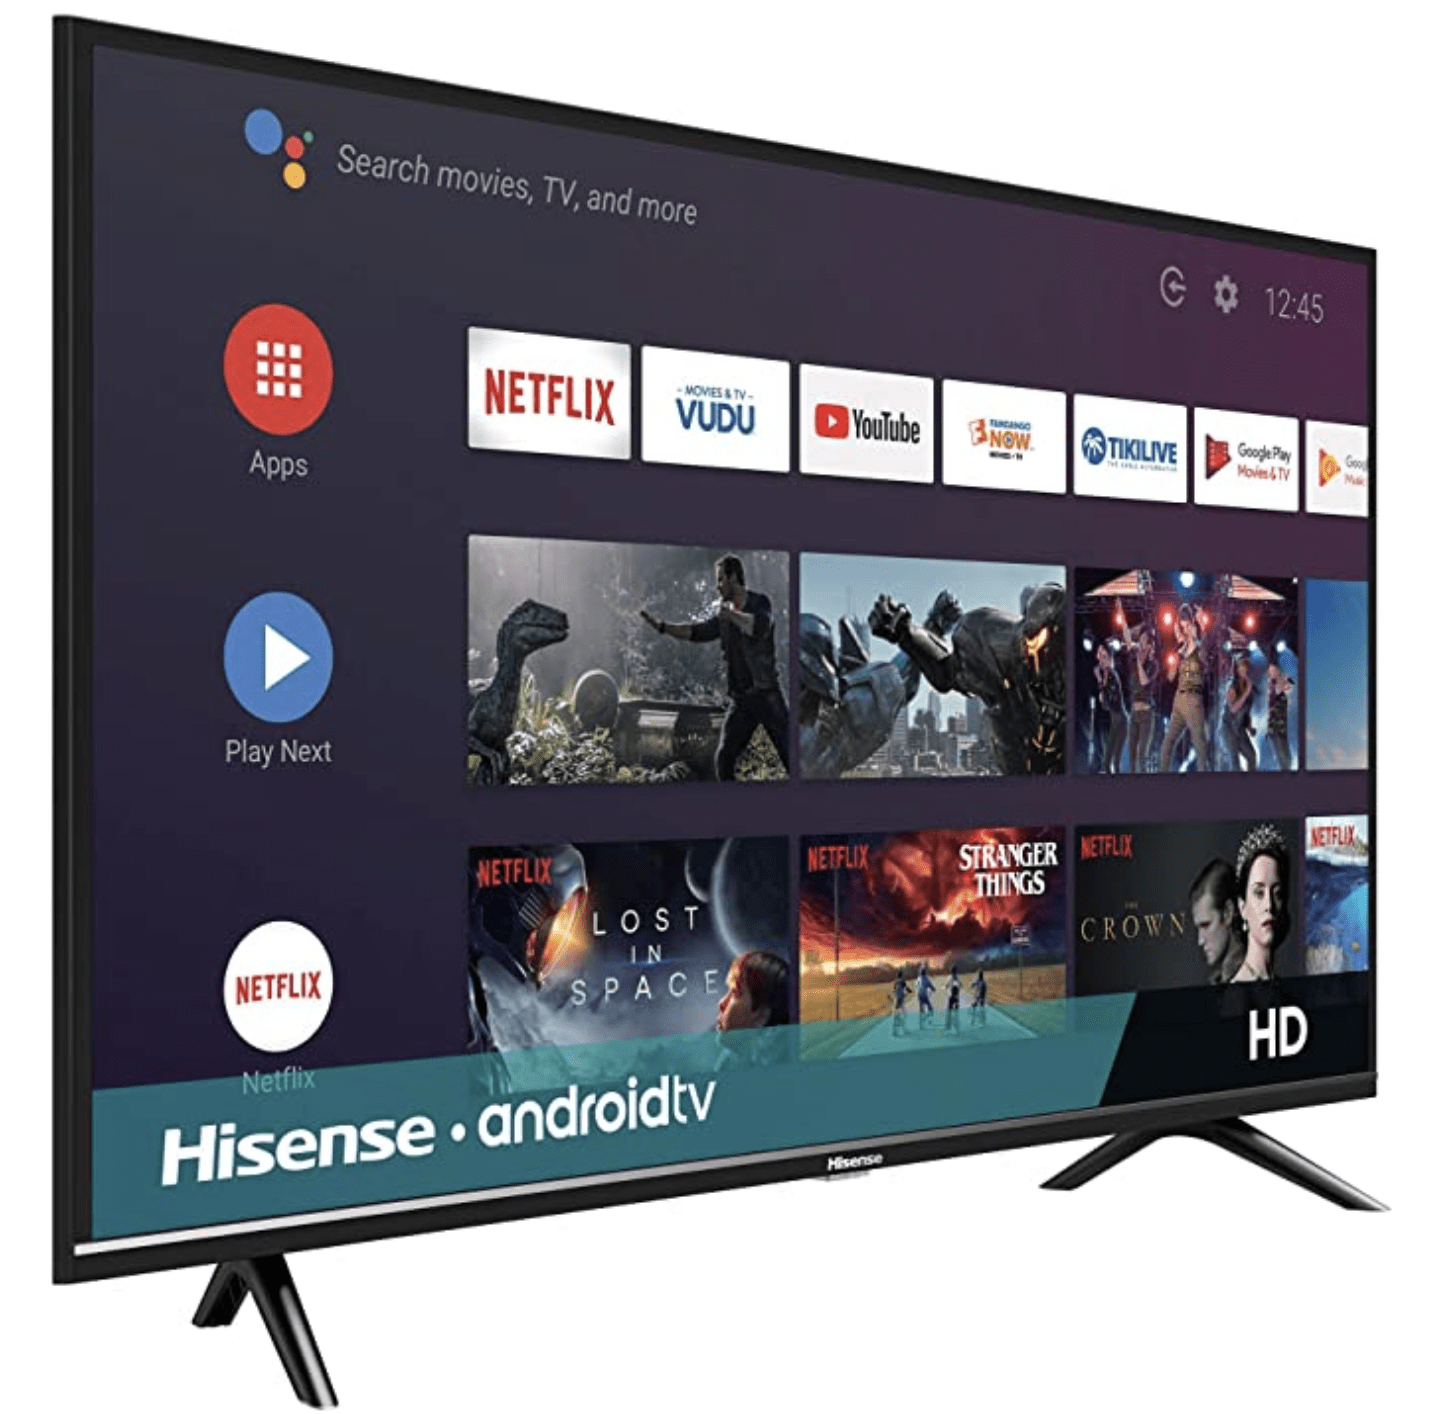 Hisense 32Inch Android Smart TV (2020 Model 32H5500F) ReviewAffi Reviews